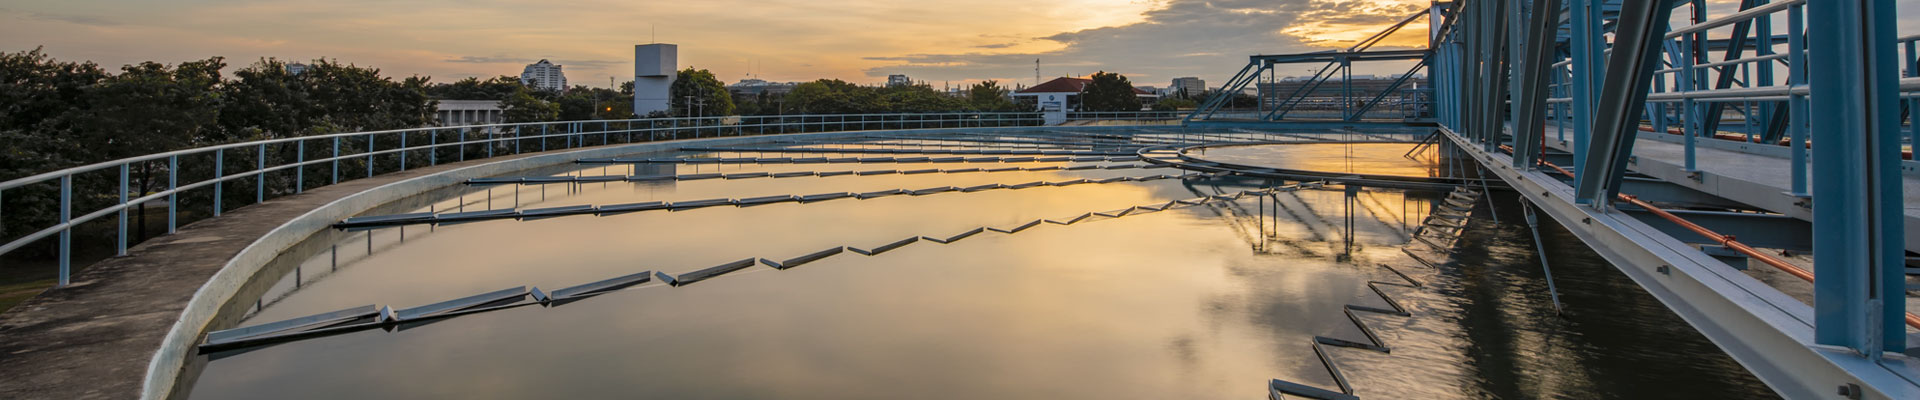 municipal wastewater treatment clarifier at dawn